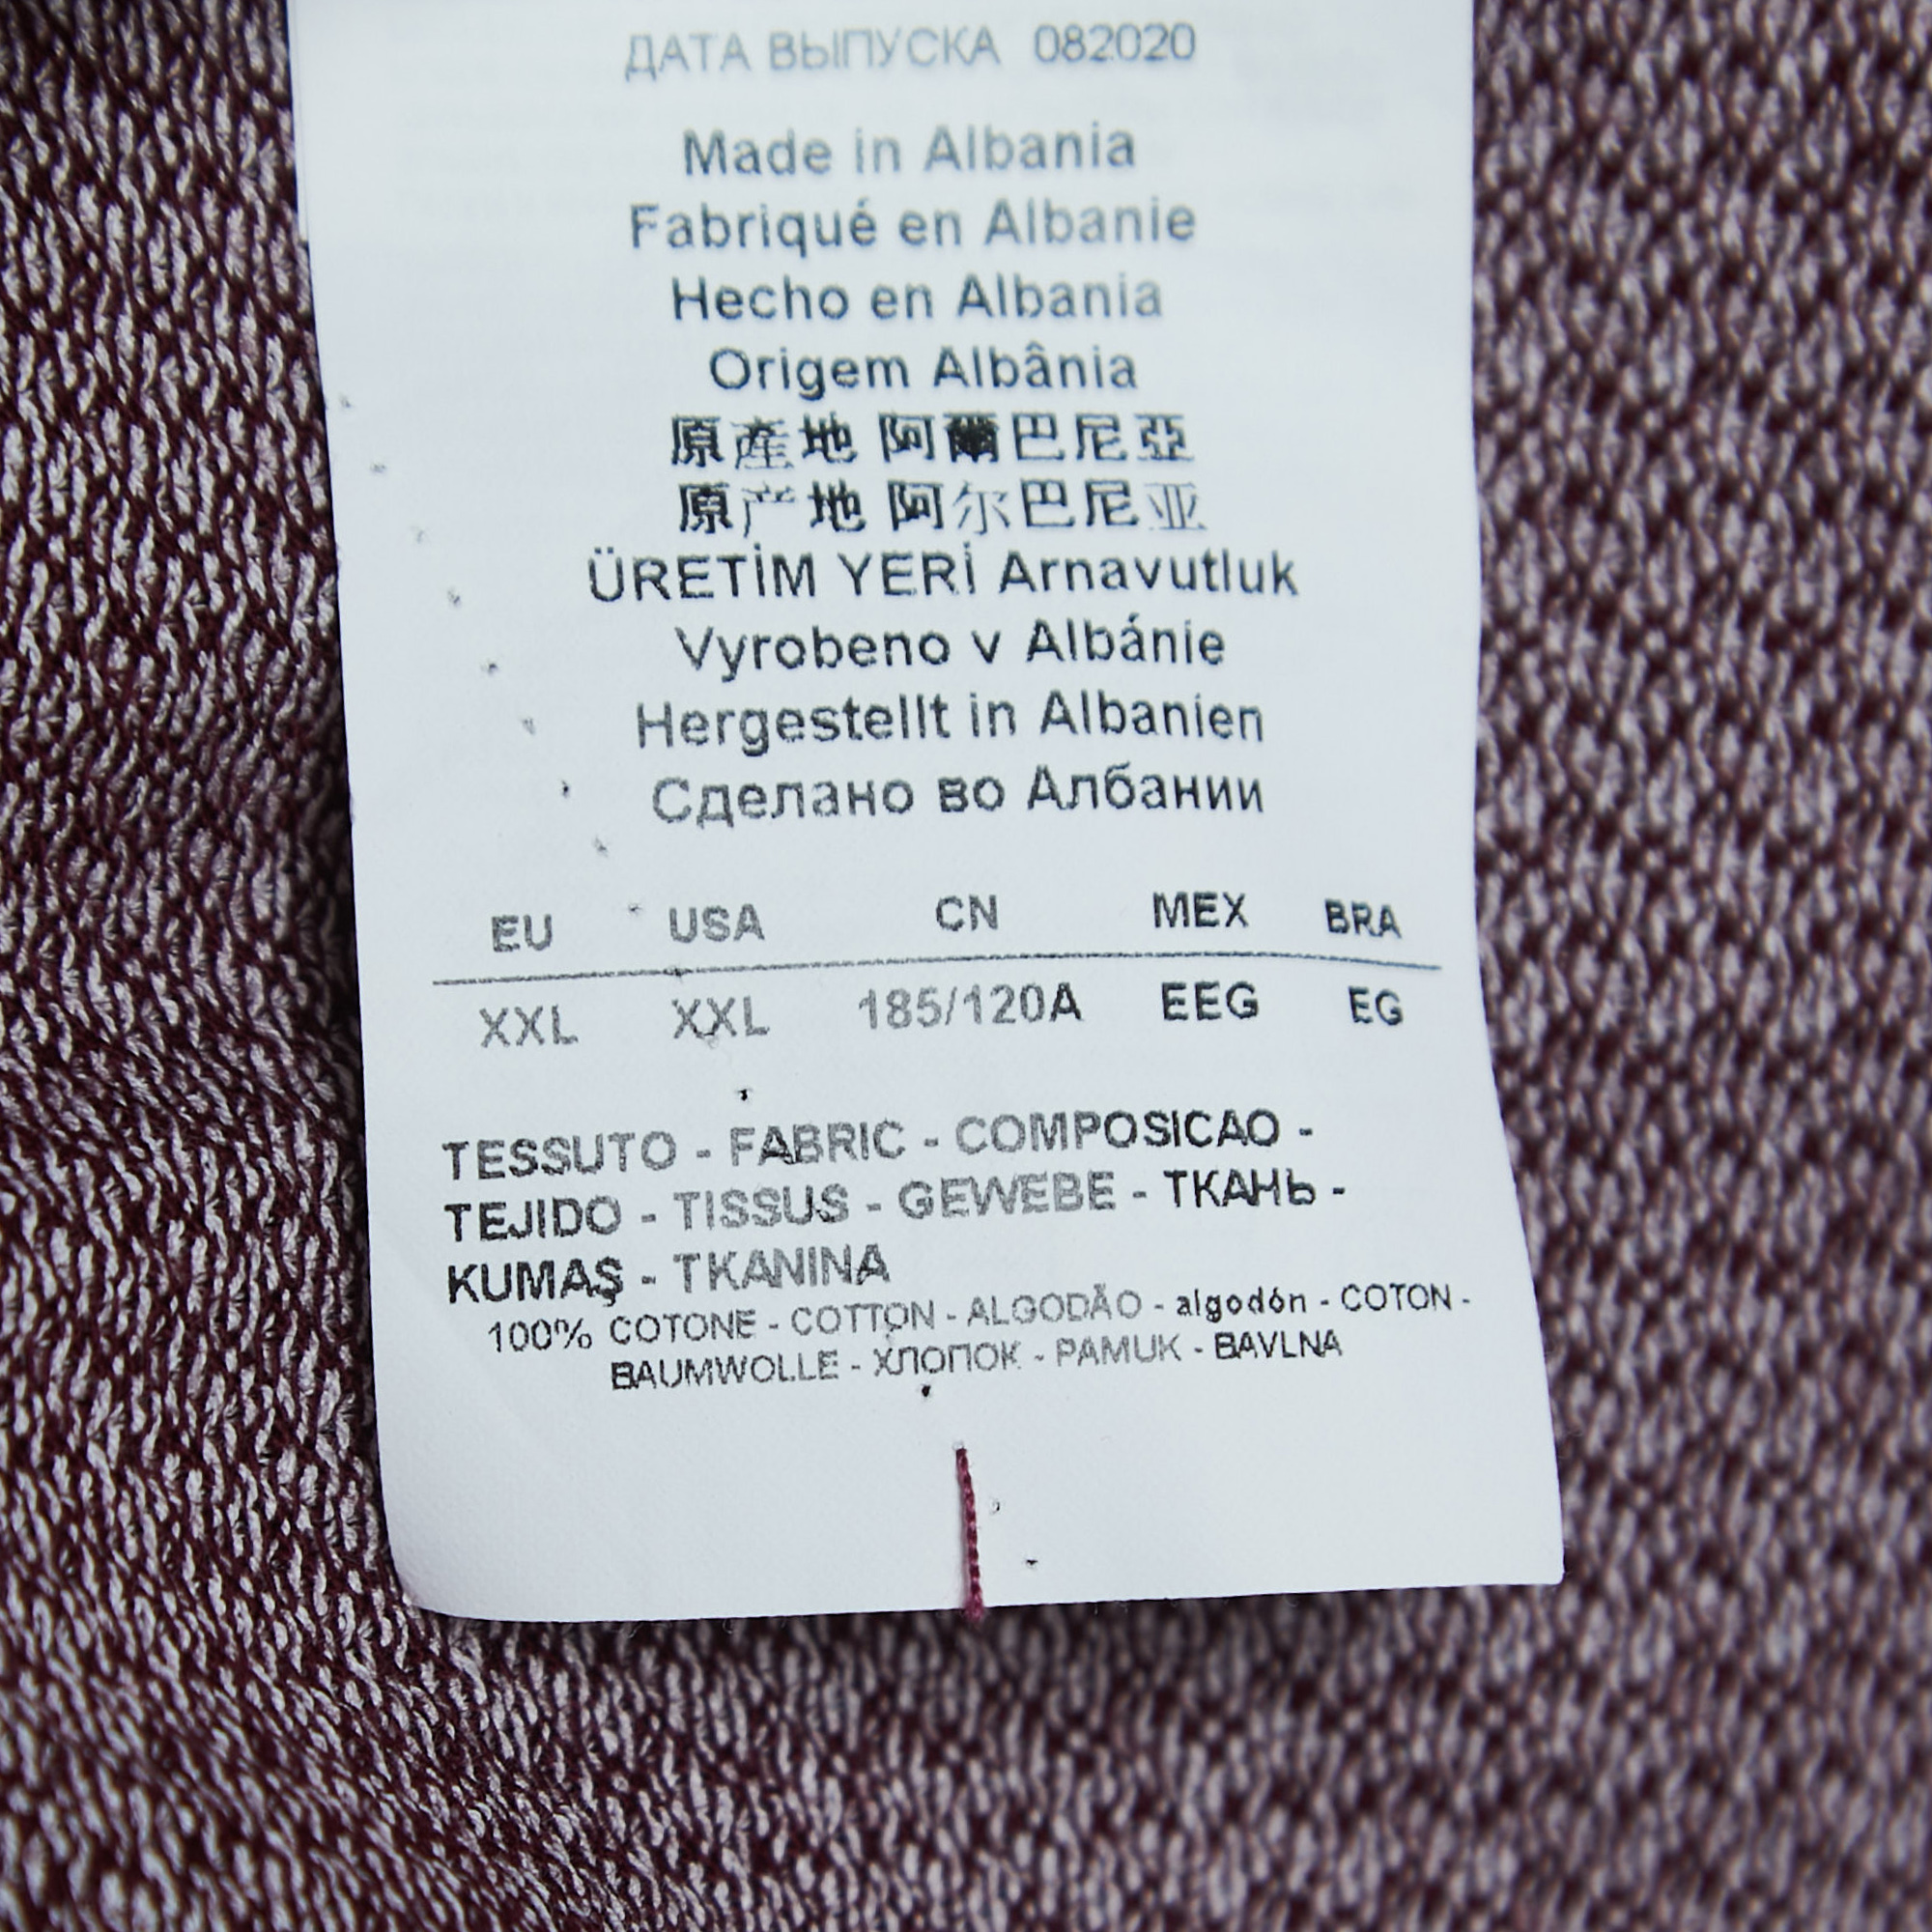 Emporio Armani Burgundy Patterned Cotton Polo T-Shirt XXL